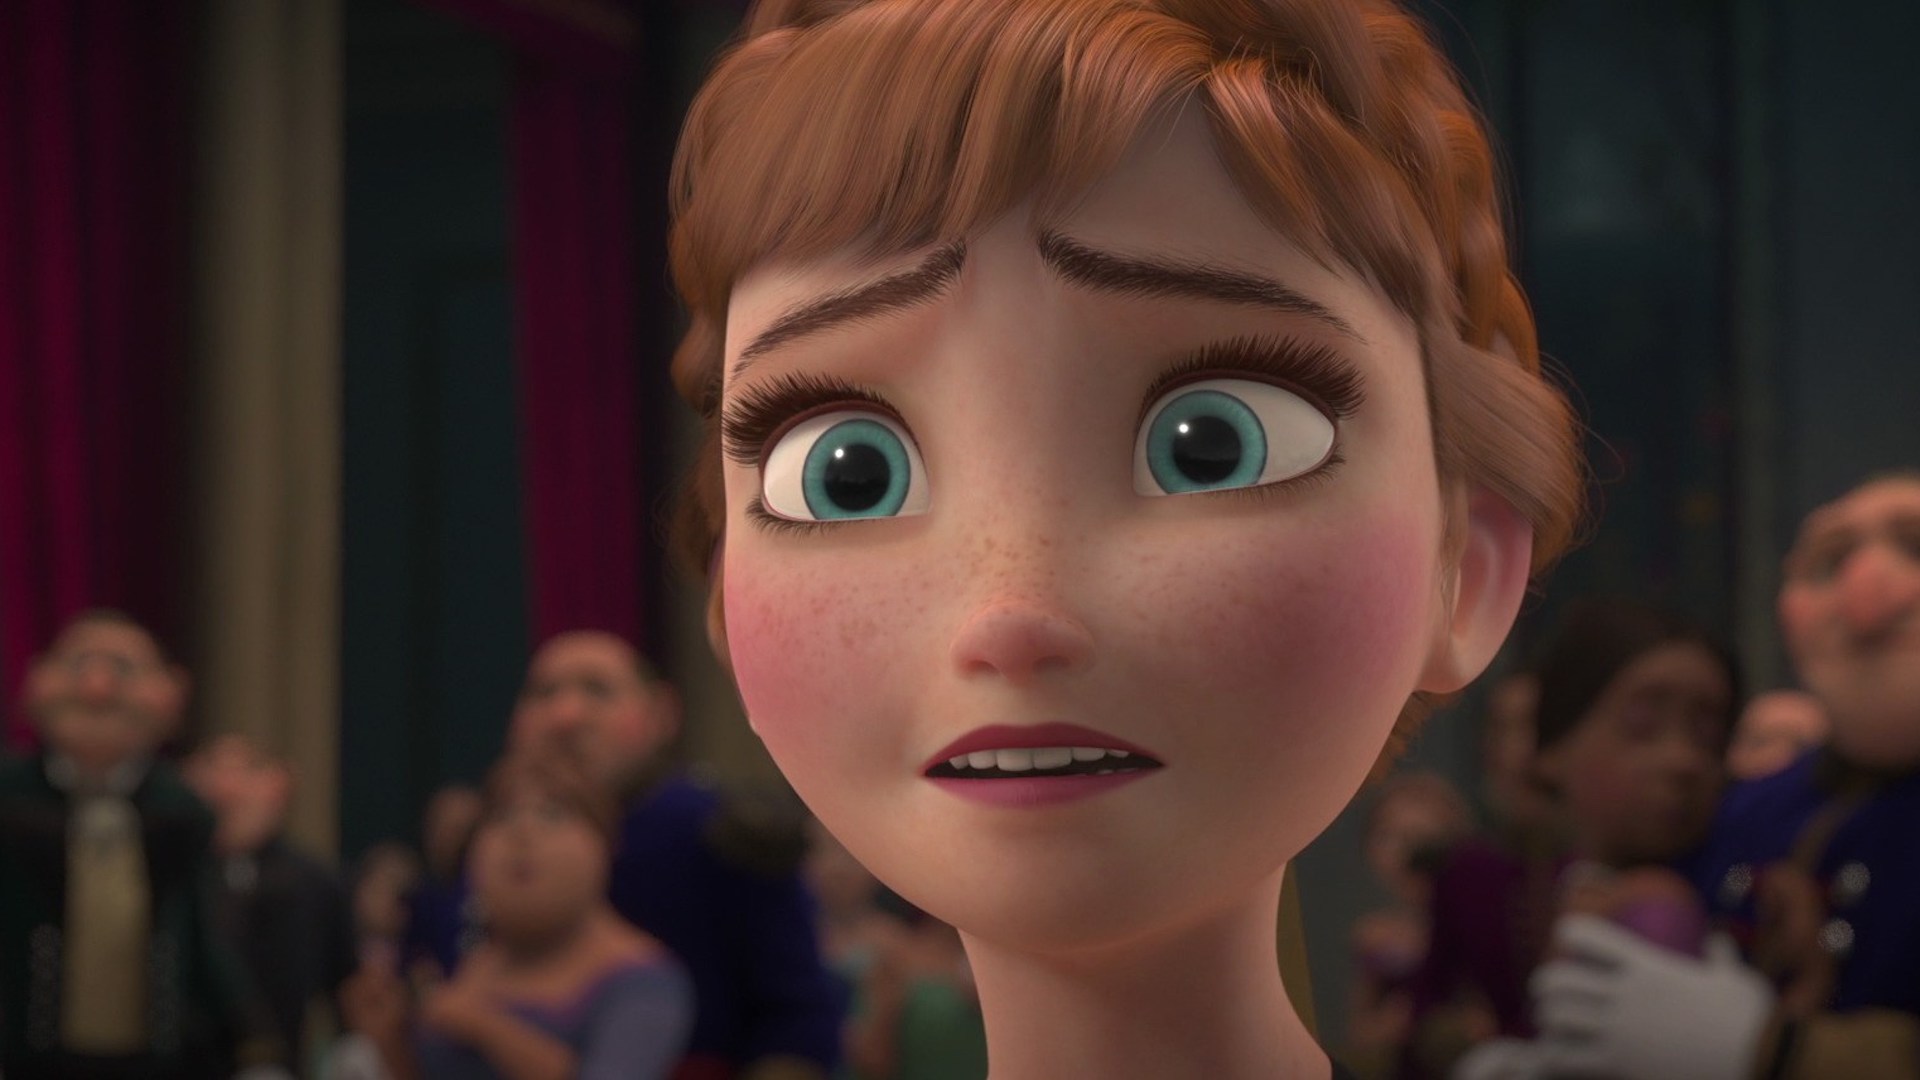 Anna makes a worried face